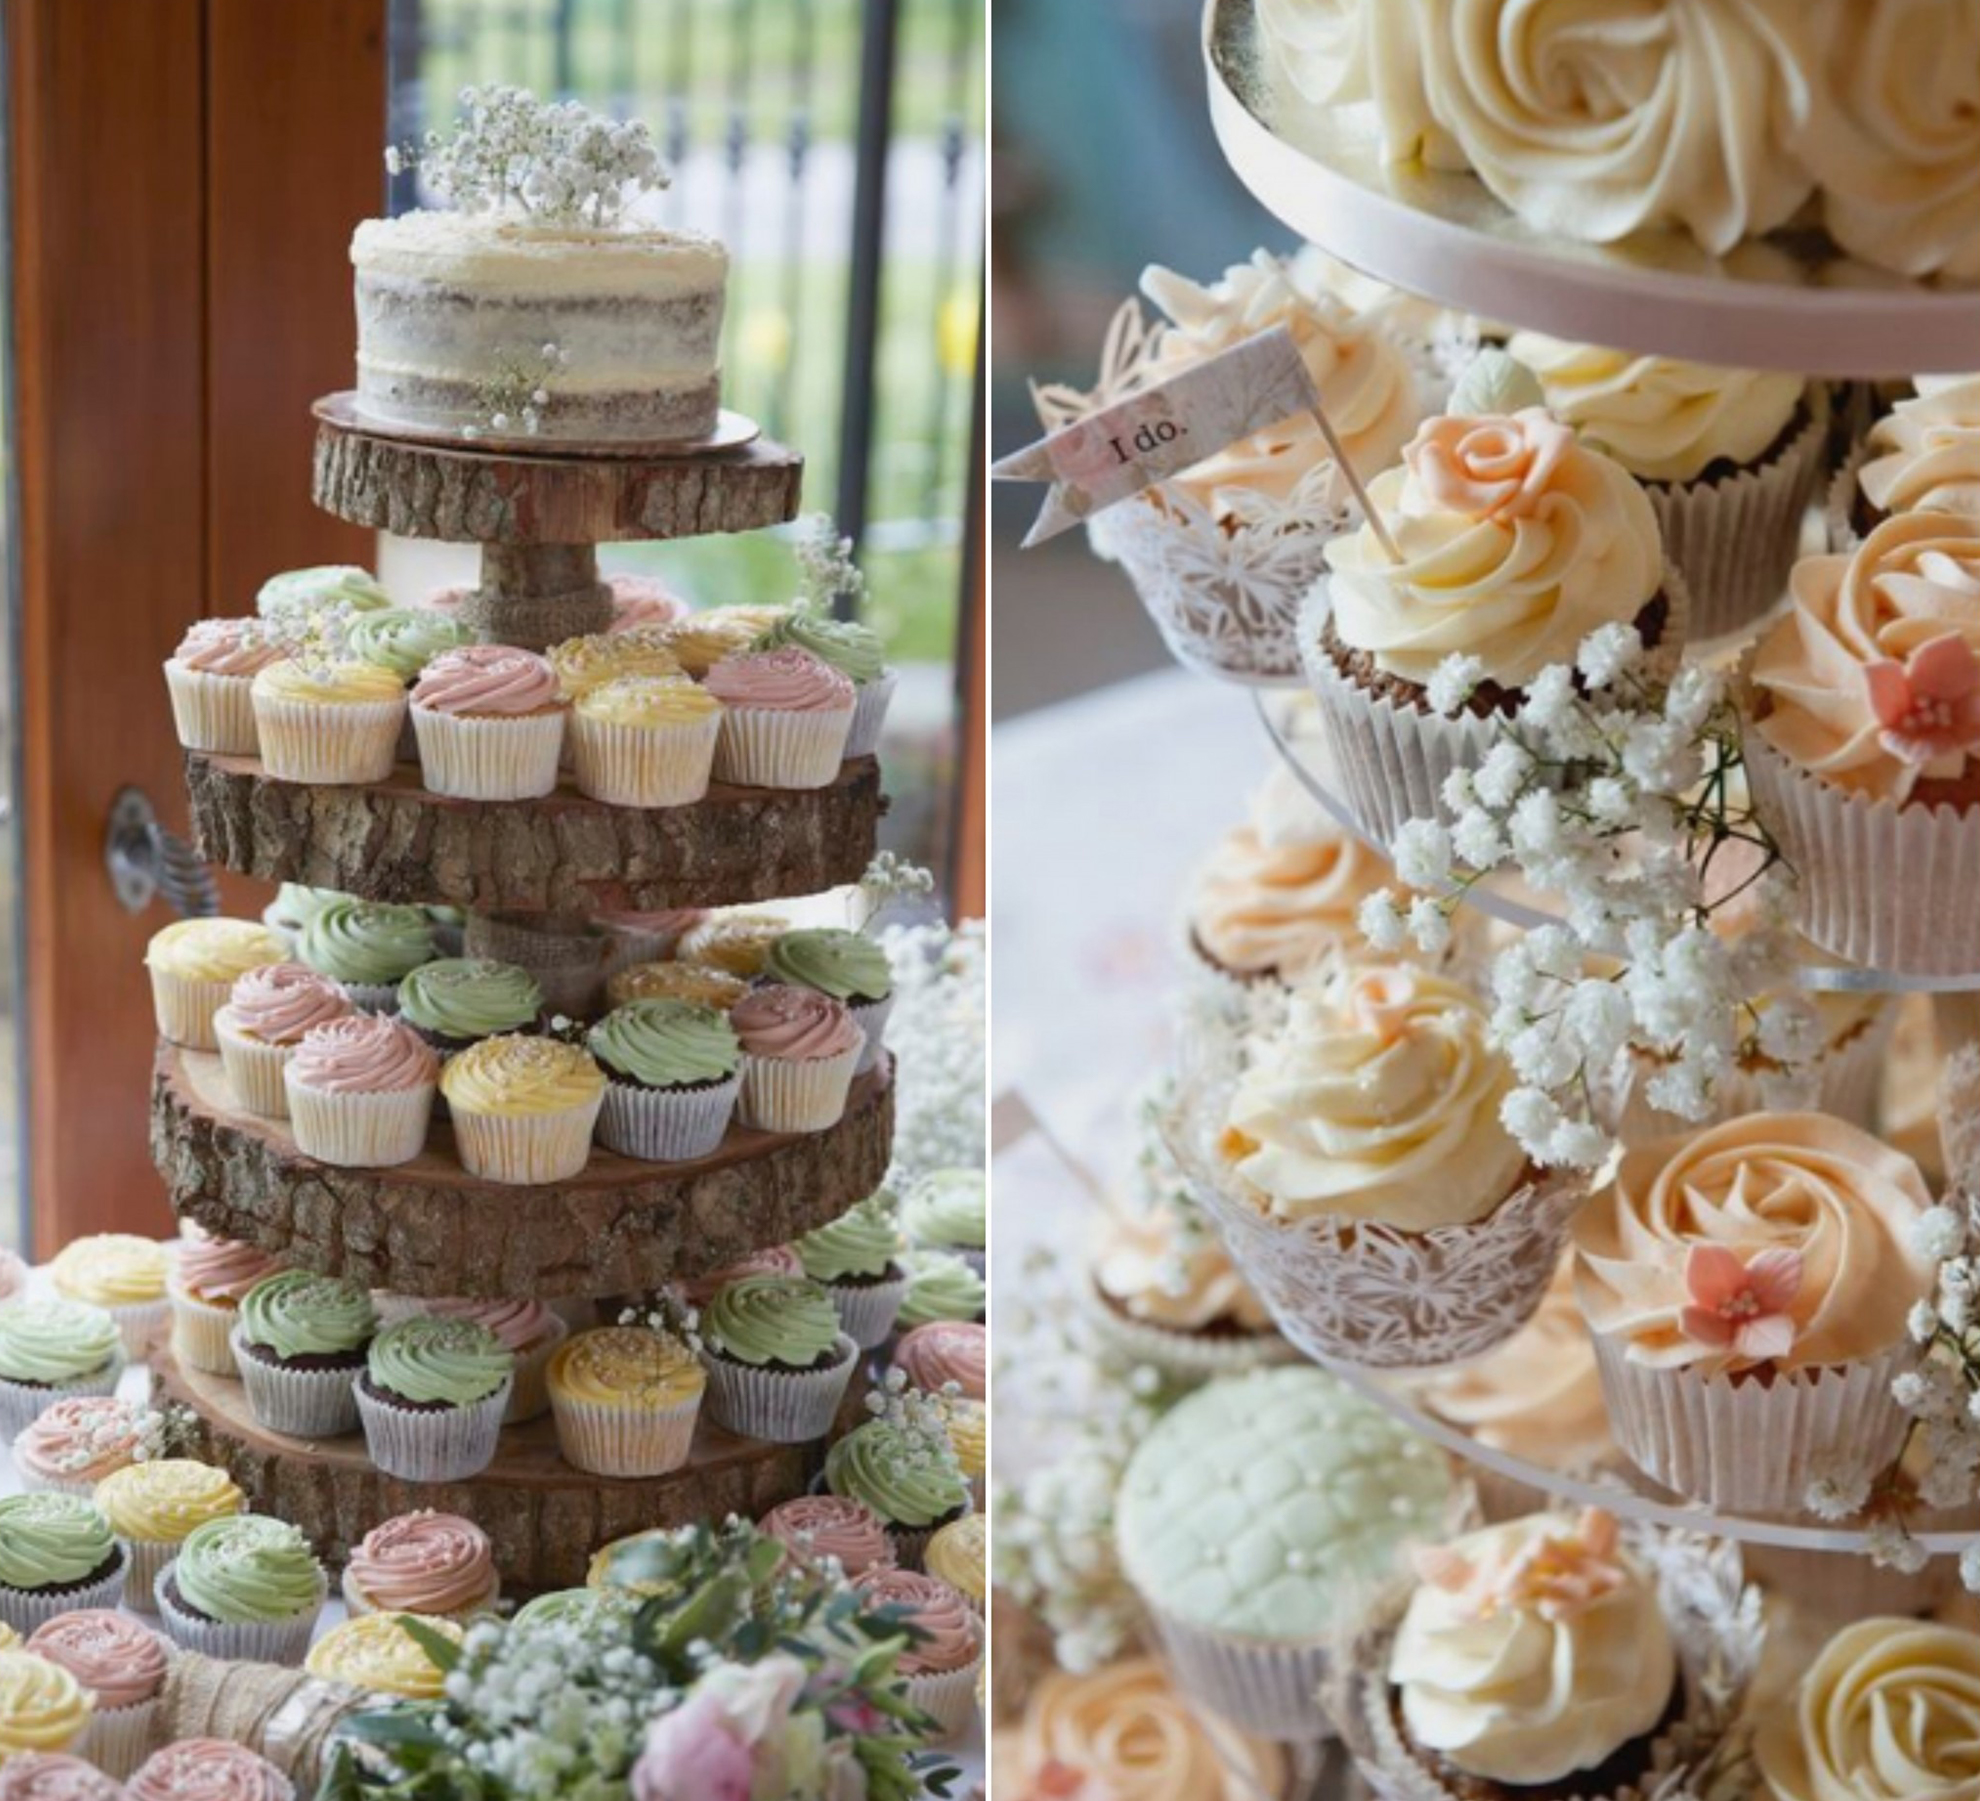 Pretty pastel wedding cupcakes as an alternative to wedding cake